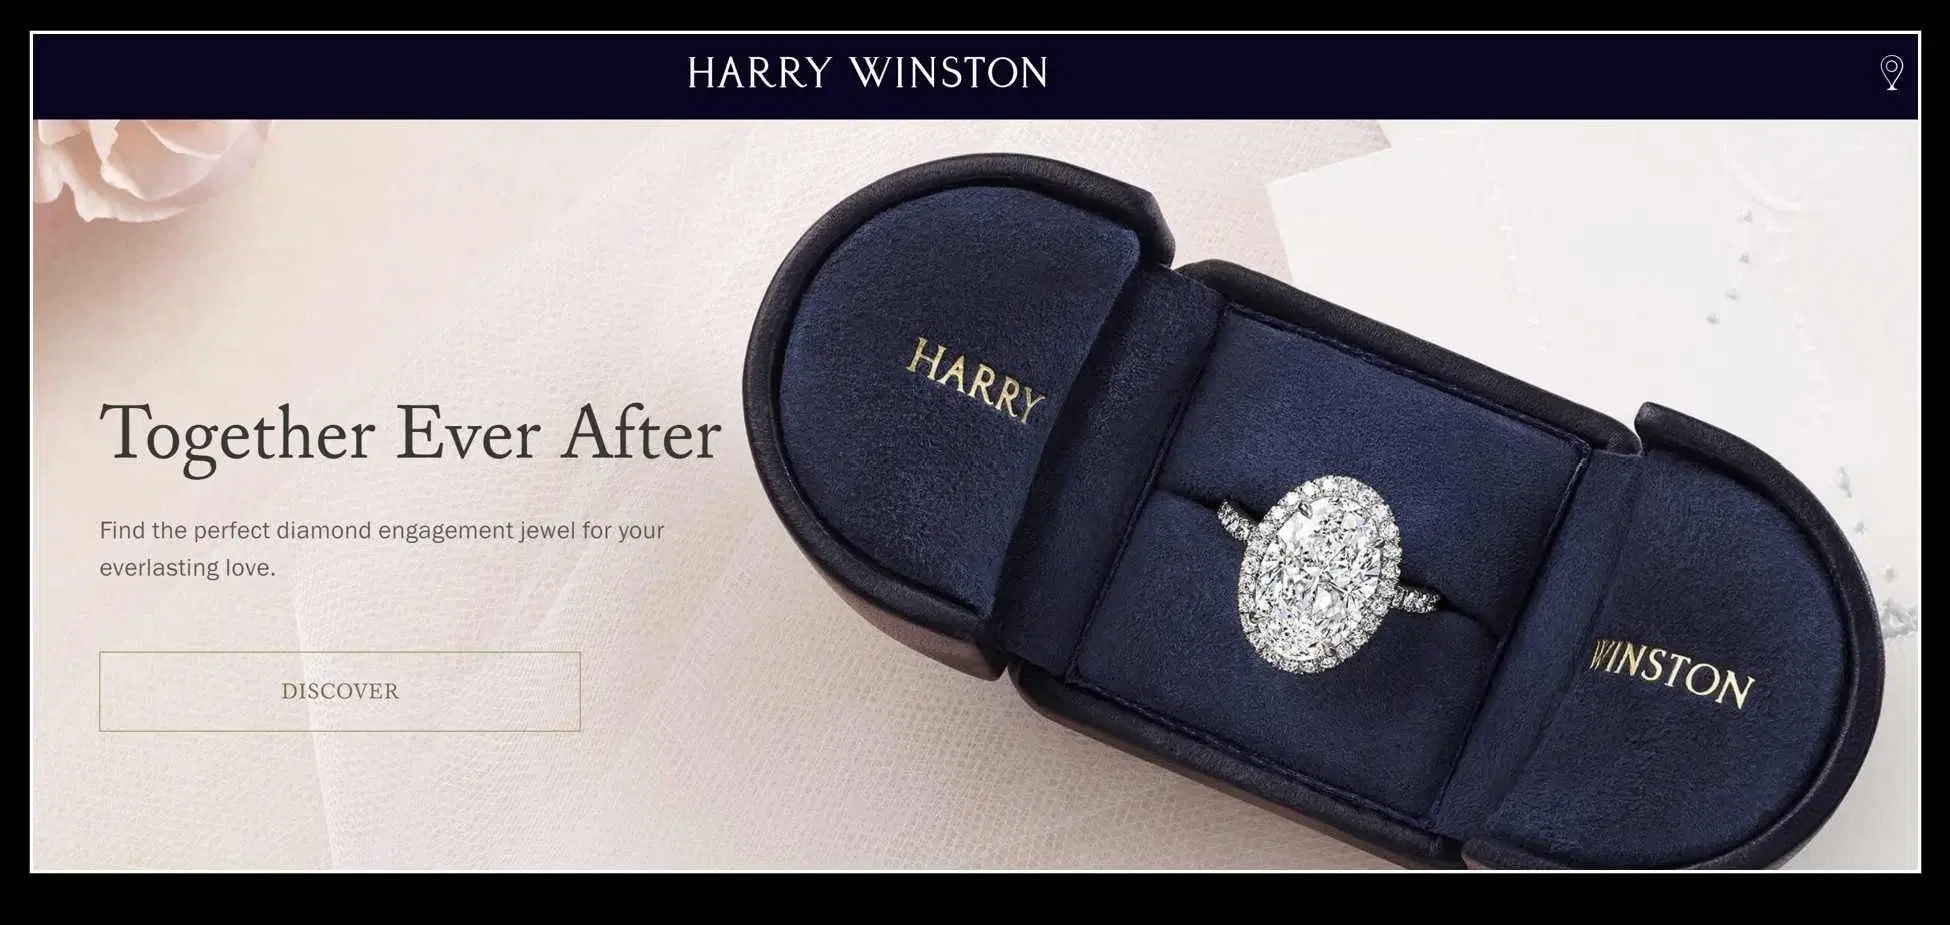 Harry Winston Review [Diamonds & Fine Jewelry Too Pricy?]